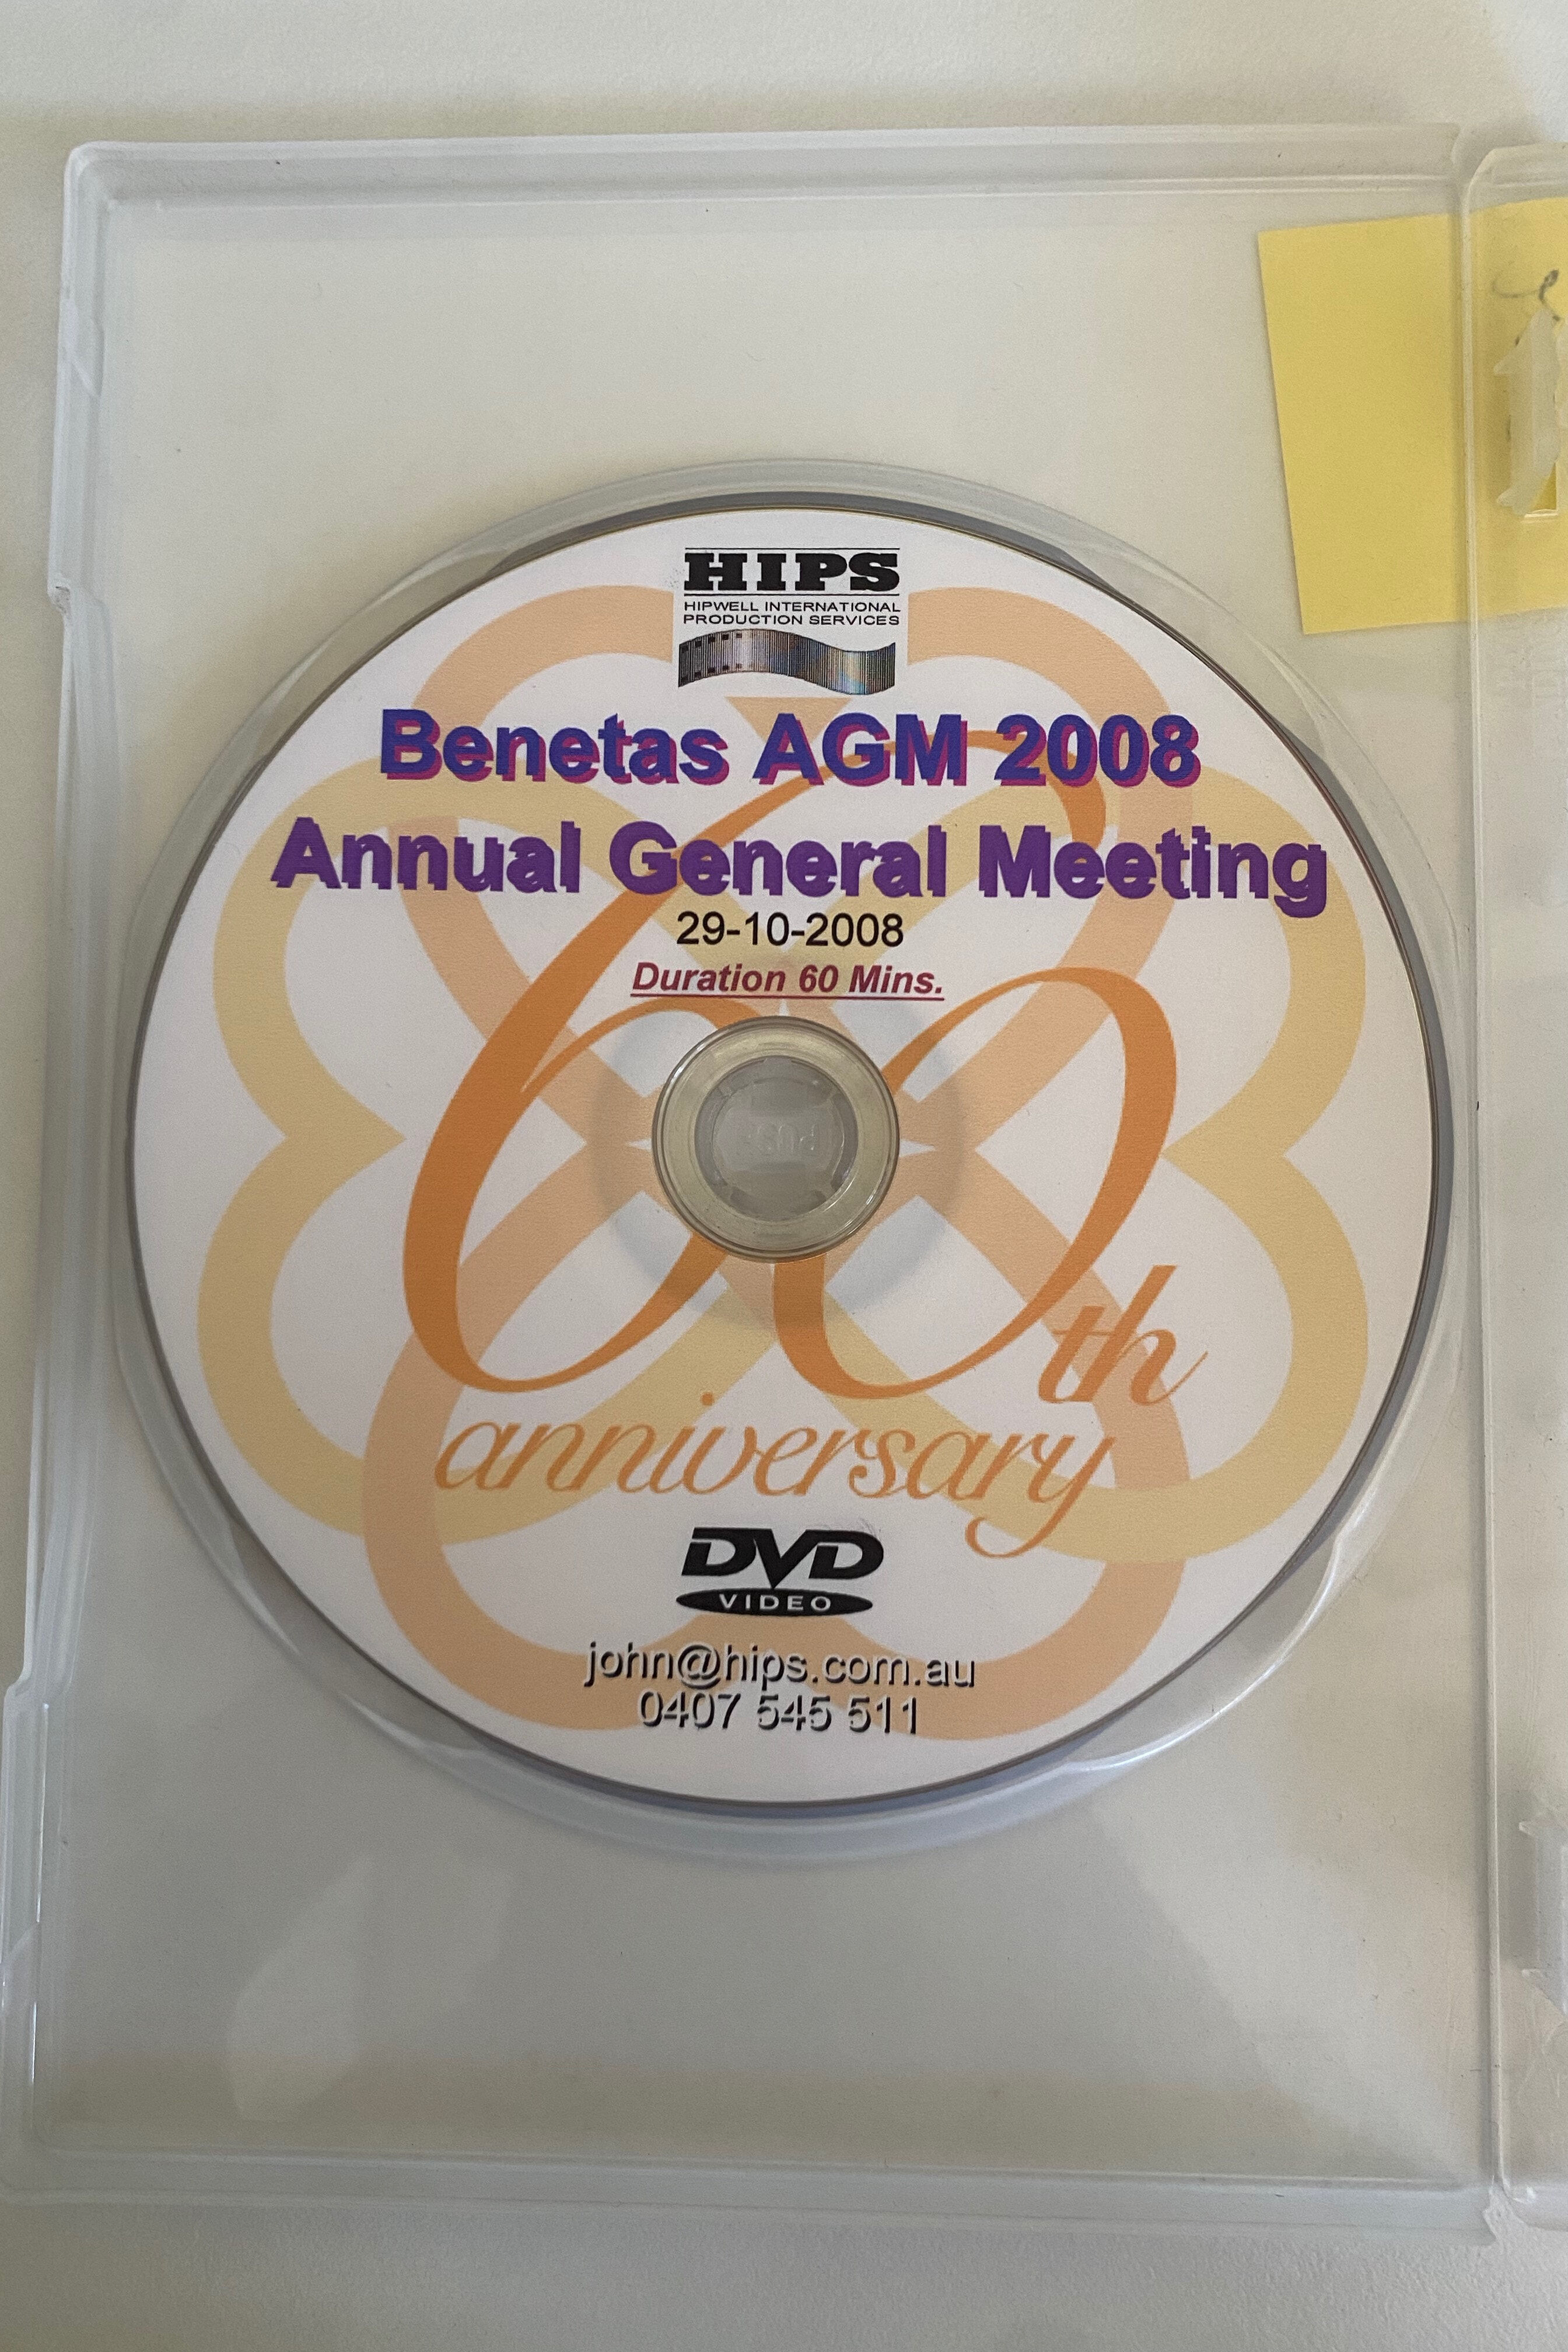 Benetas General Meeting